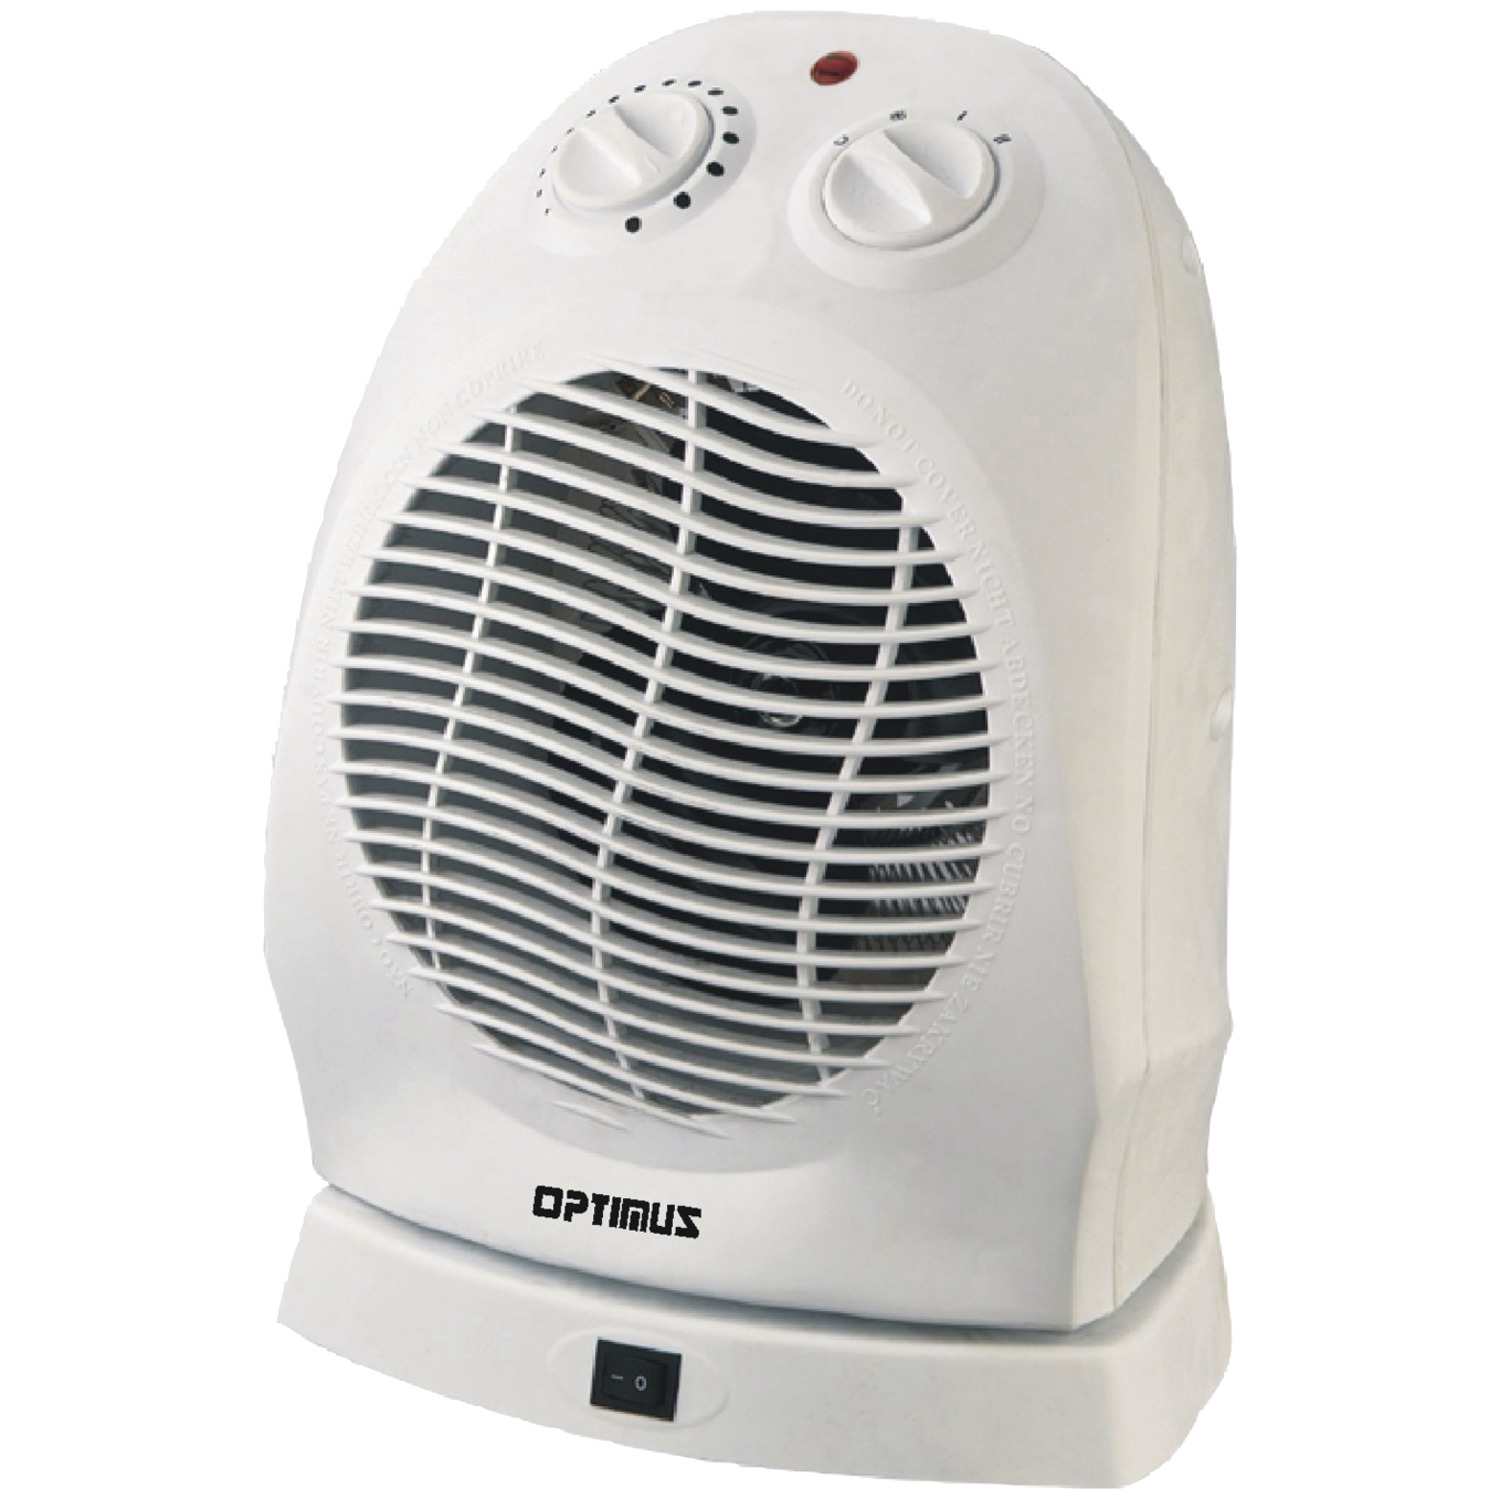 Optimus H1382 Heater Fan Oscillating Thermostat Portable